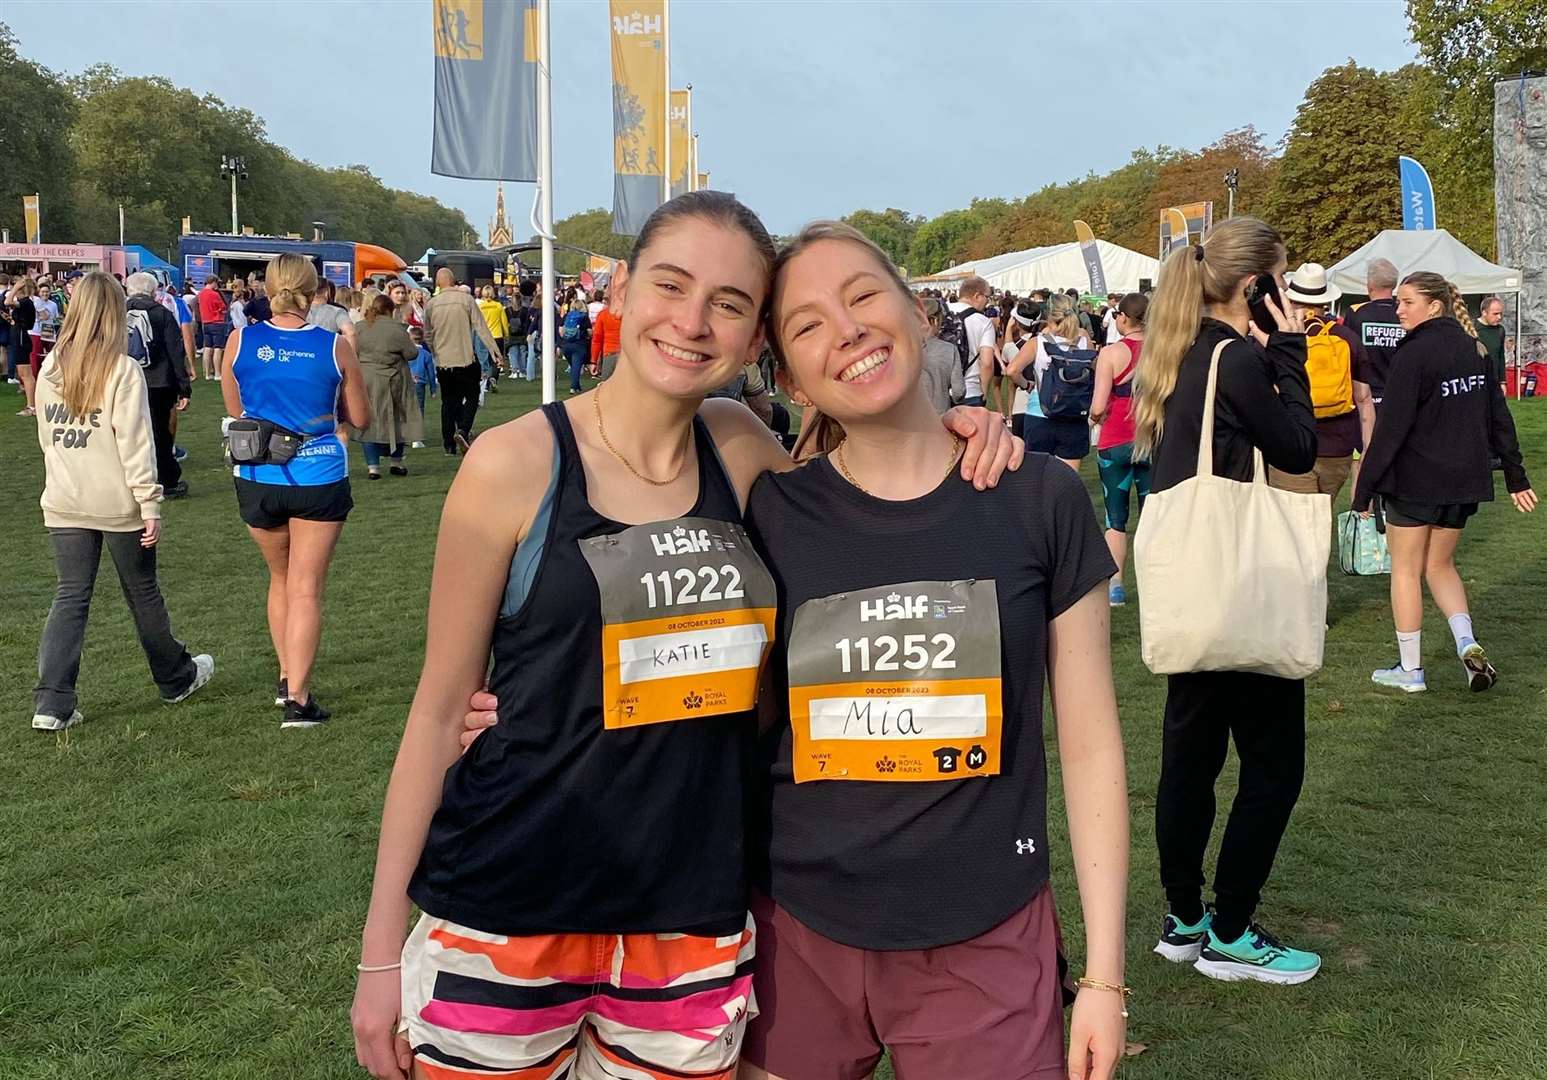 Katie (left) Mia (right) at the Royal Parks half marathon